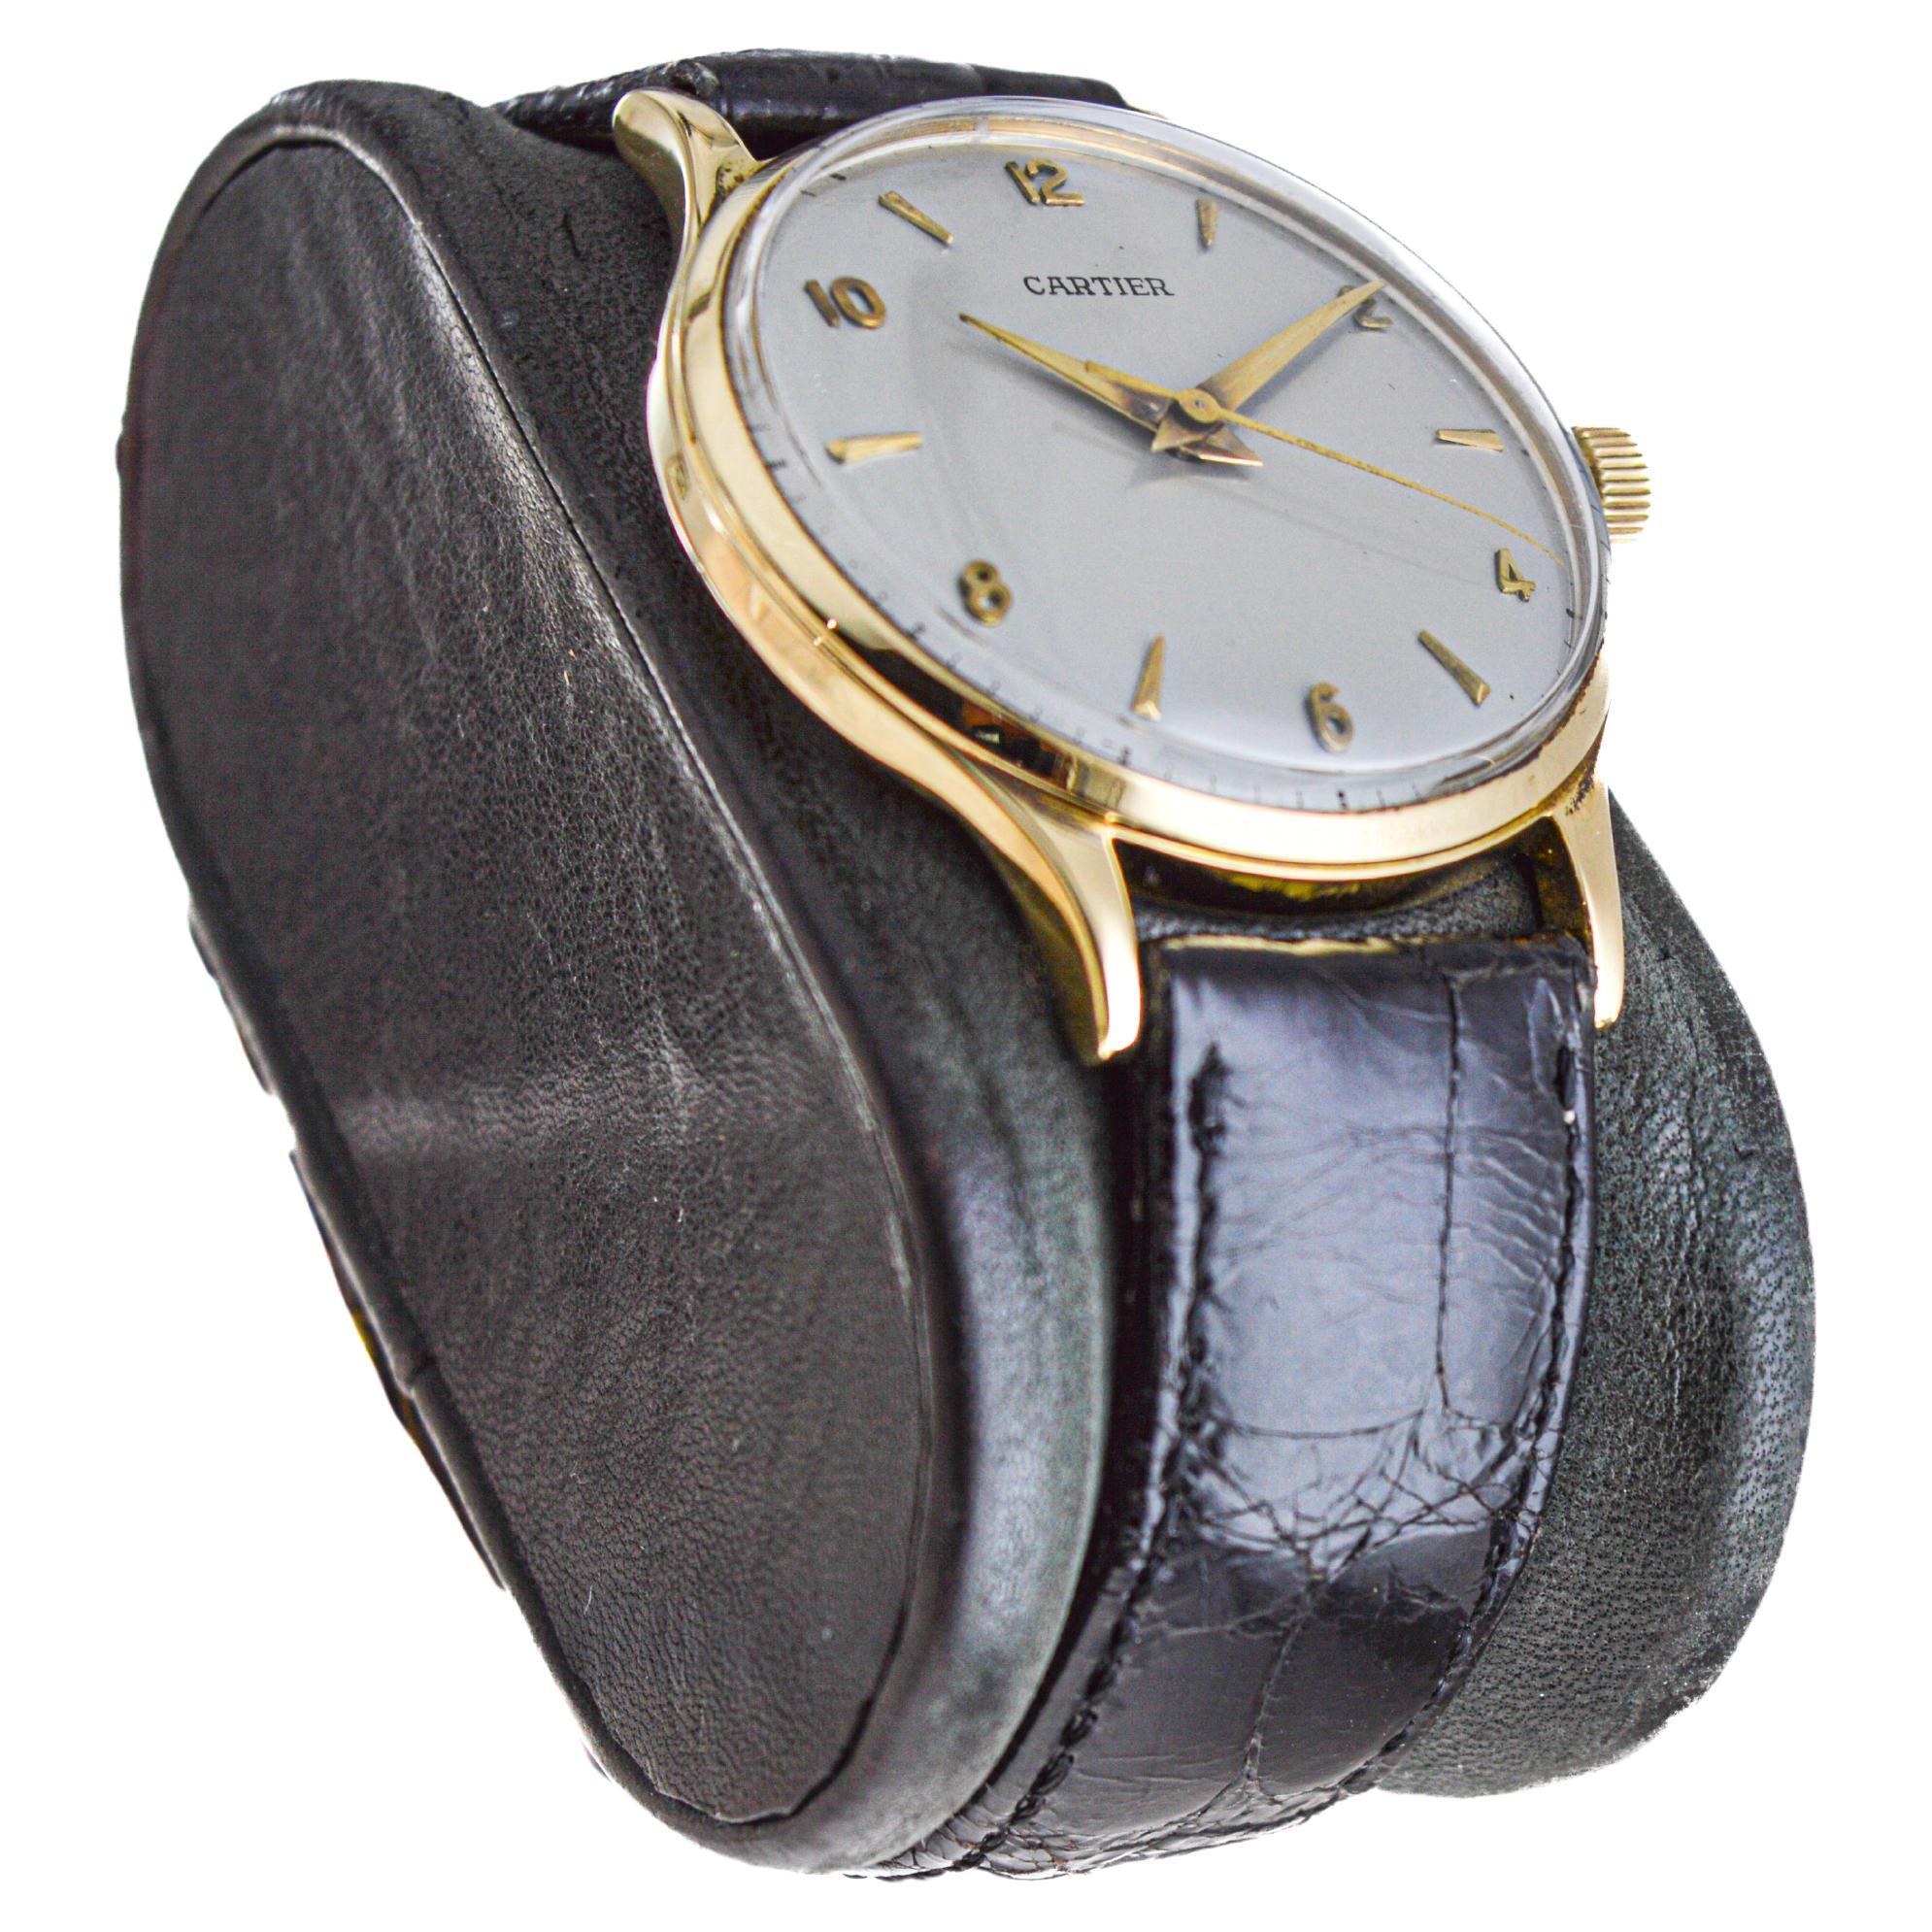 Cartier Paris 18Kt. Gold Calatrava Style Watch, from 1950's European Watch Co.  For Sale 4